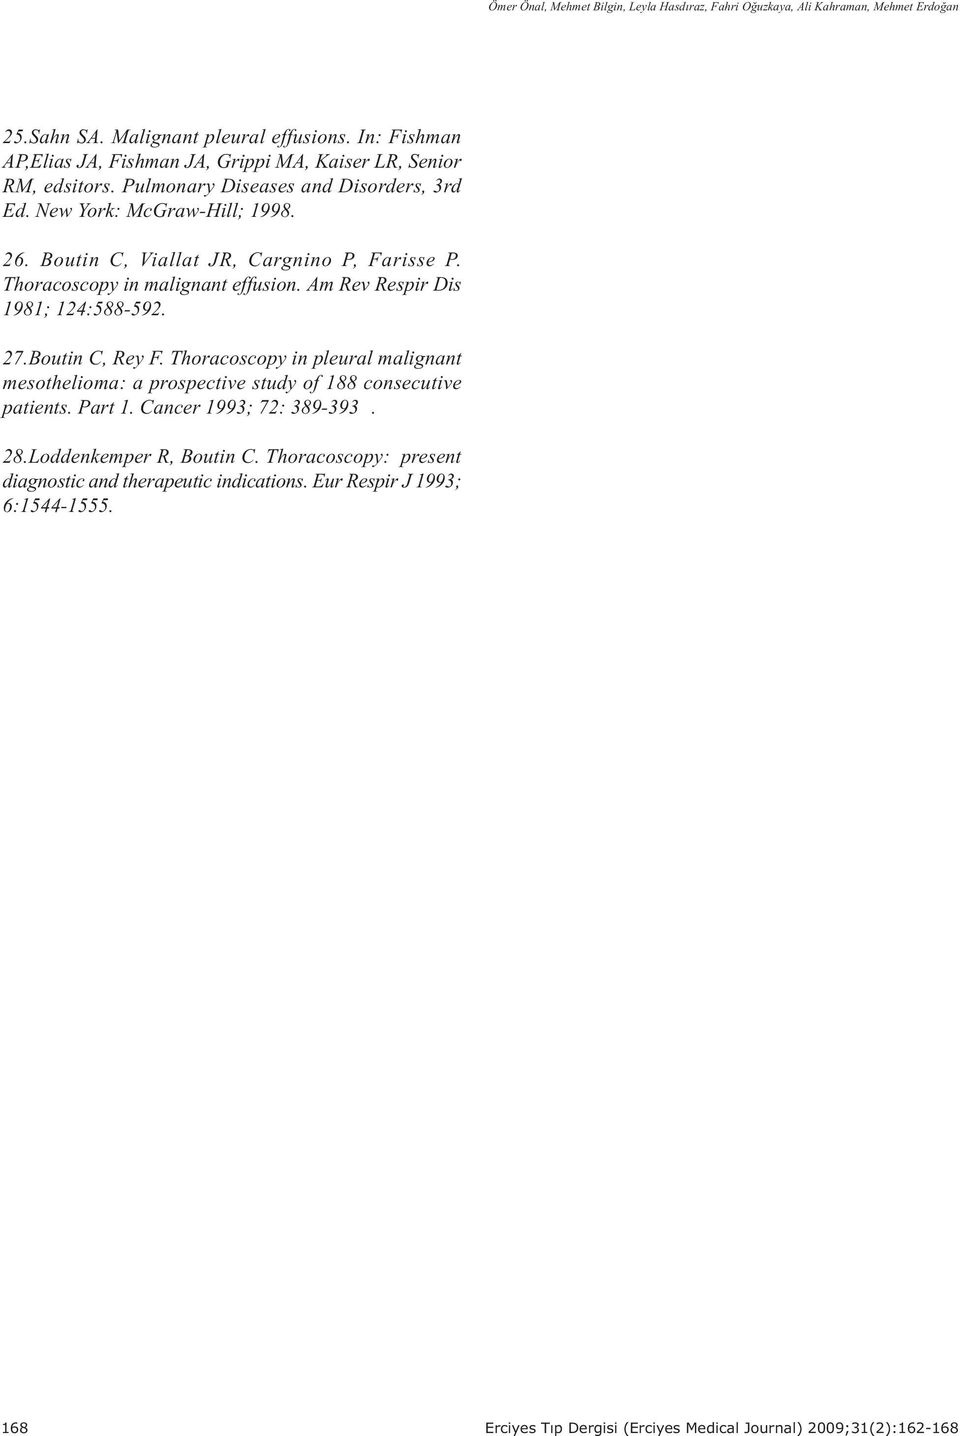 Boutin C, Viallat JR, Cargnino P, Farisse P. Thoracoscopy in malignant effusion. Am Rev Respir Dis 1981; 124:588-592. 27.Boutin C, Rey F.